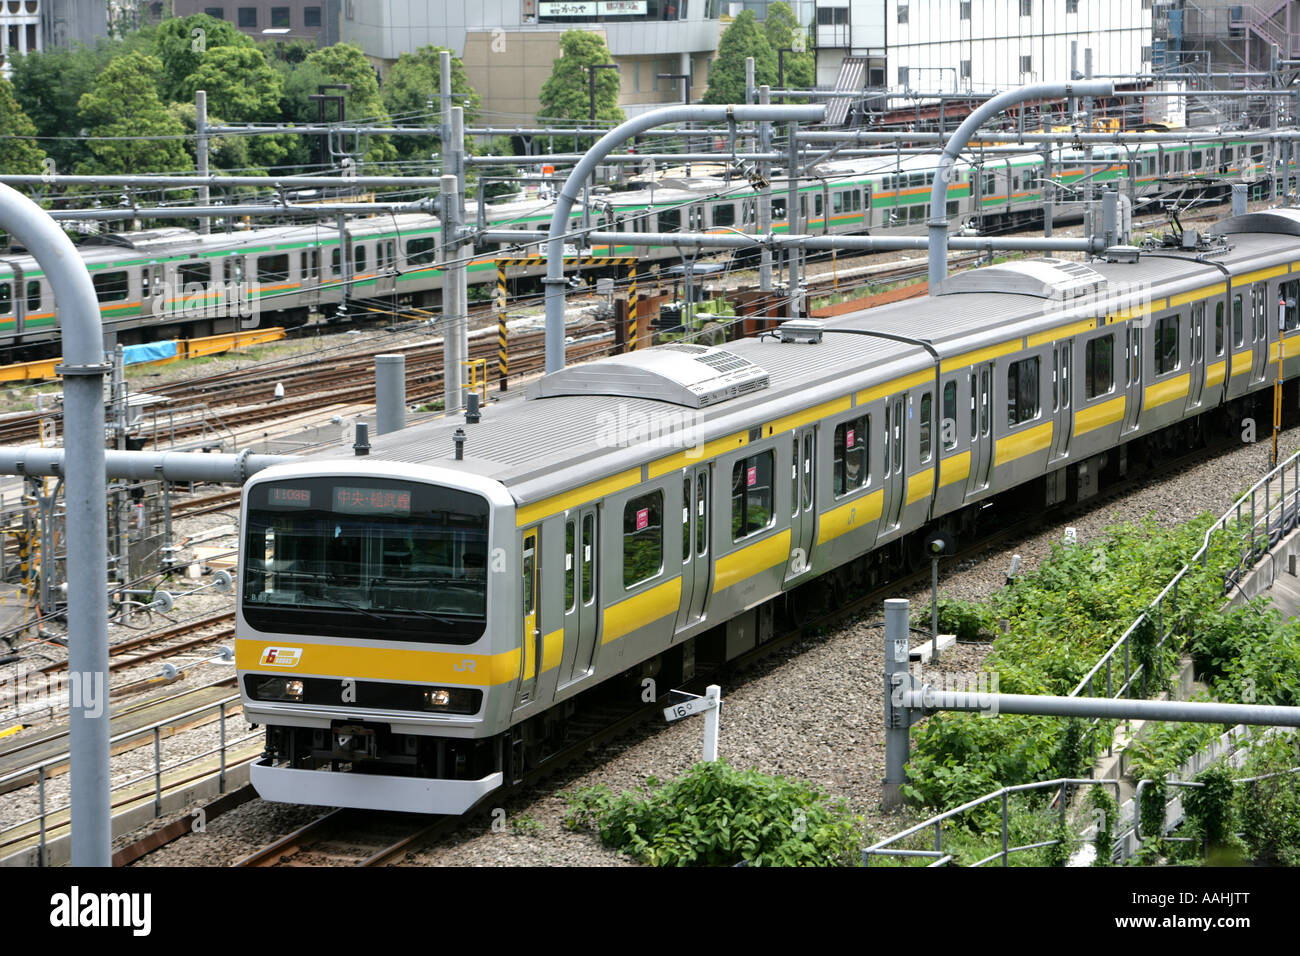 JPN, Japan, Tokyo: Tokyo Metro, JR-Line, trains on tracks Stock Photo